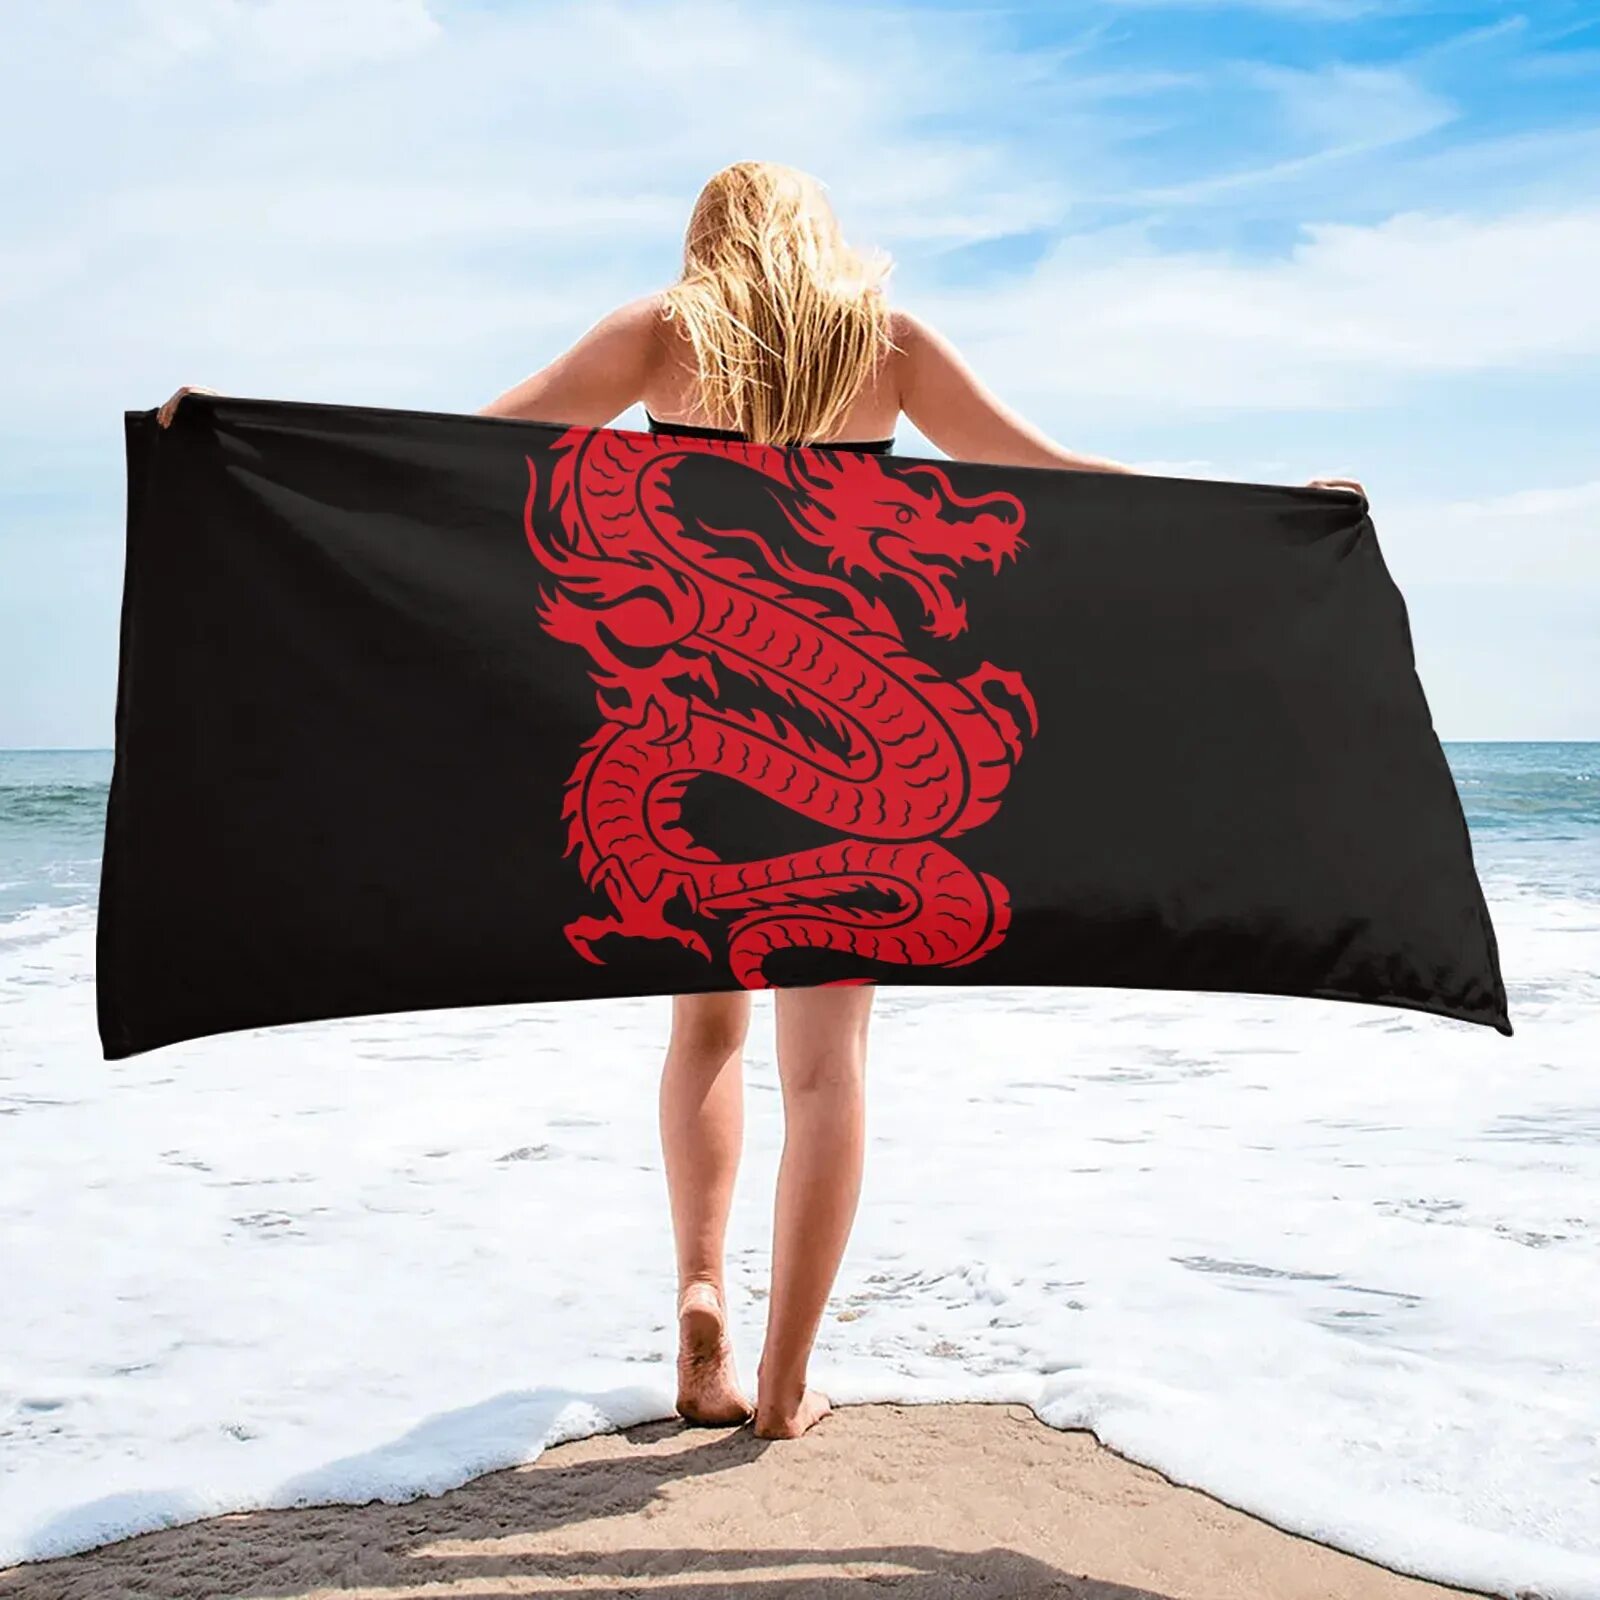 Полотенце с драконом. Полотенце банное с драконом. Пляжное полотенце с девушкой. Большое полотенце с драконом.